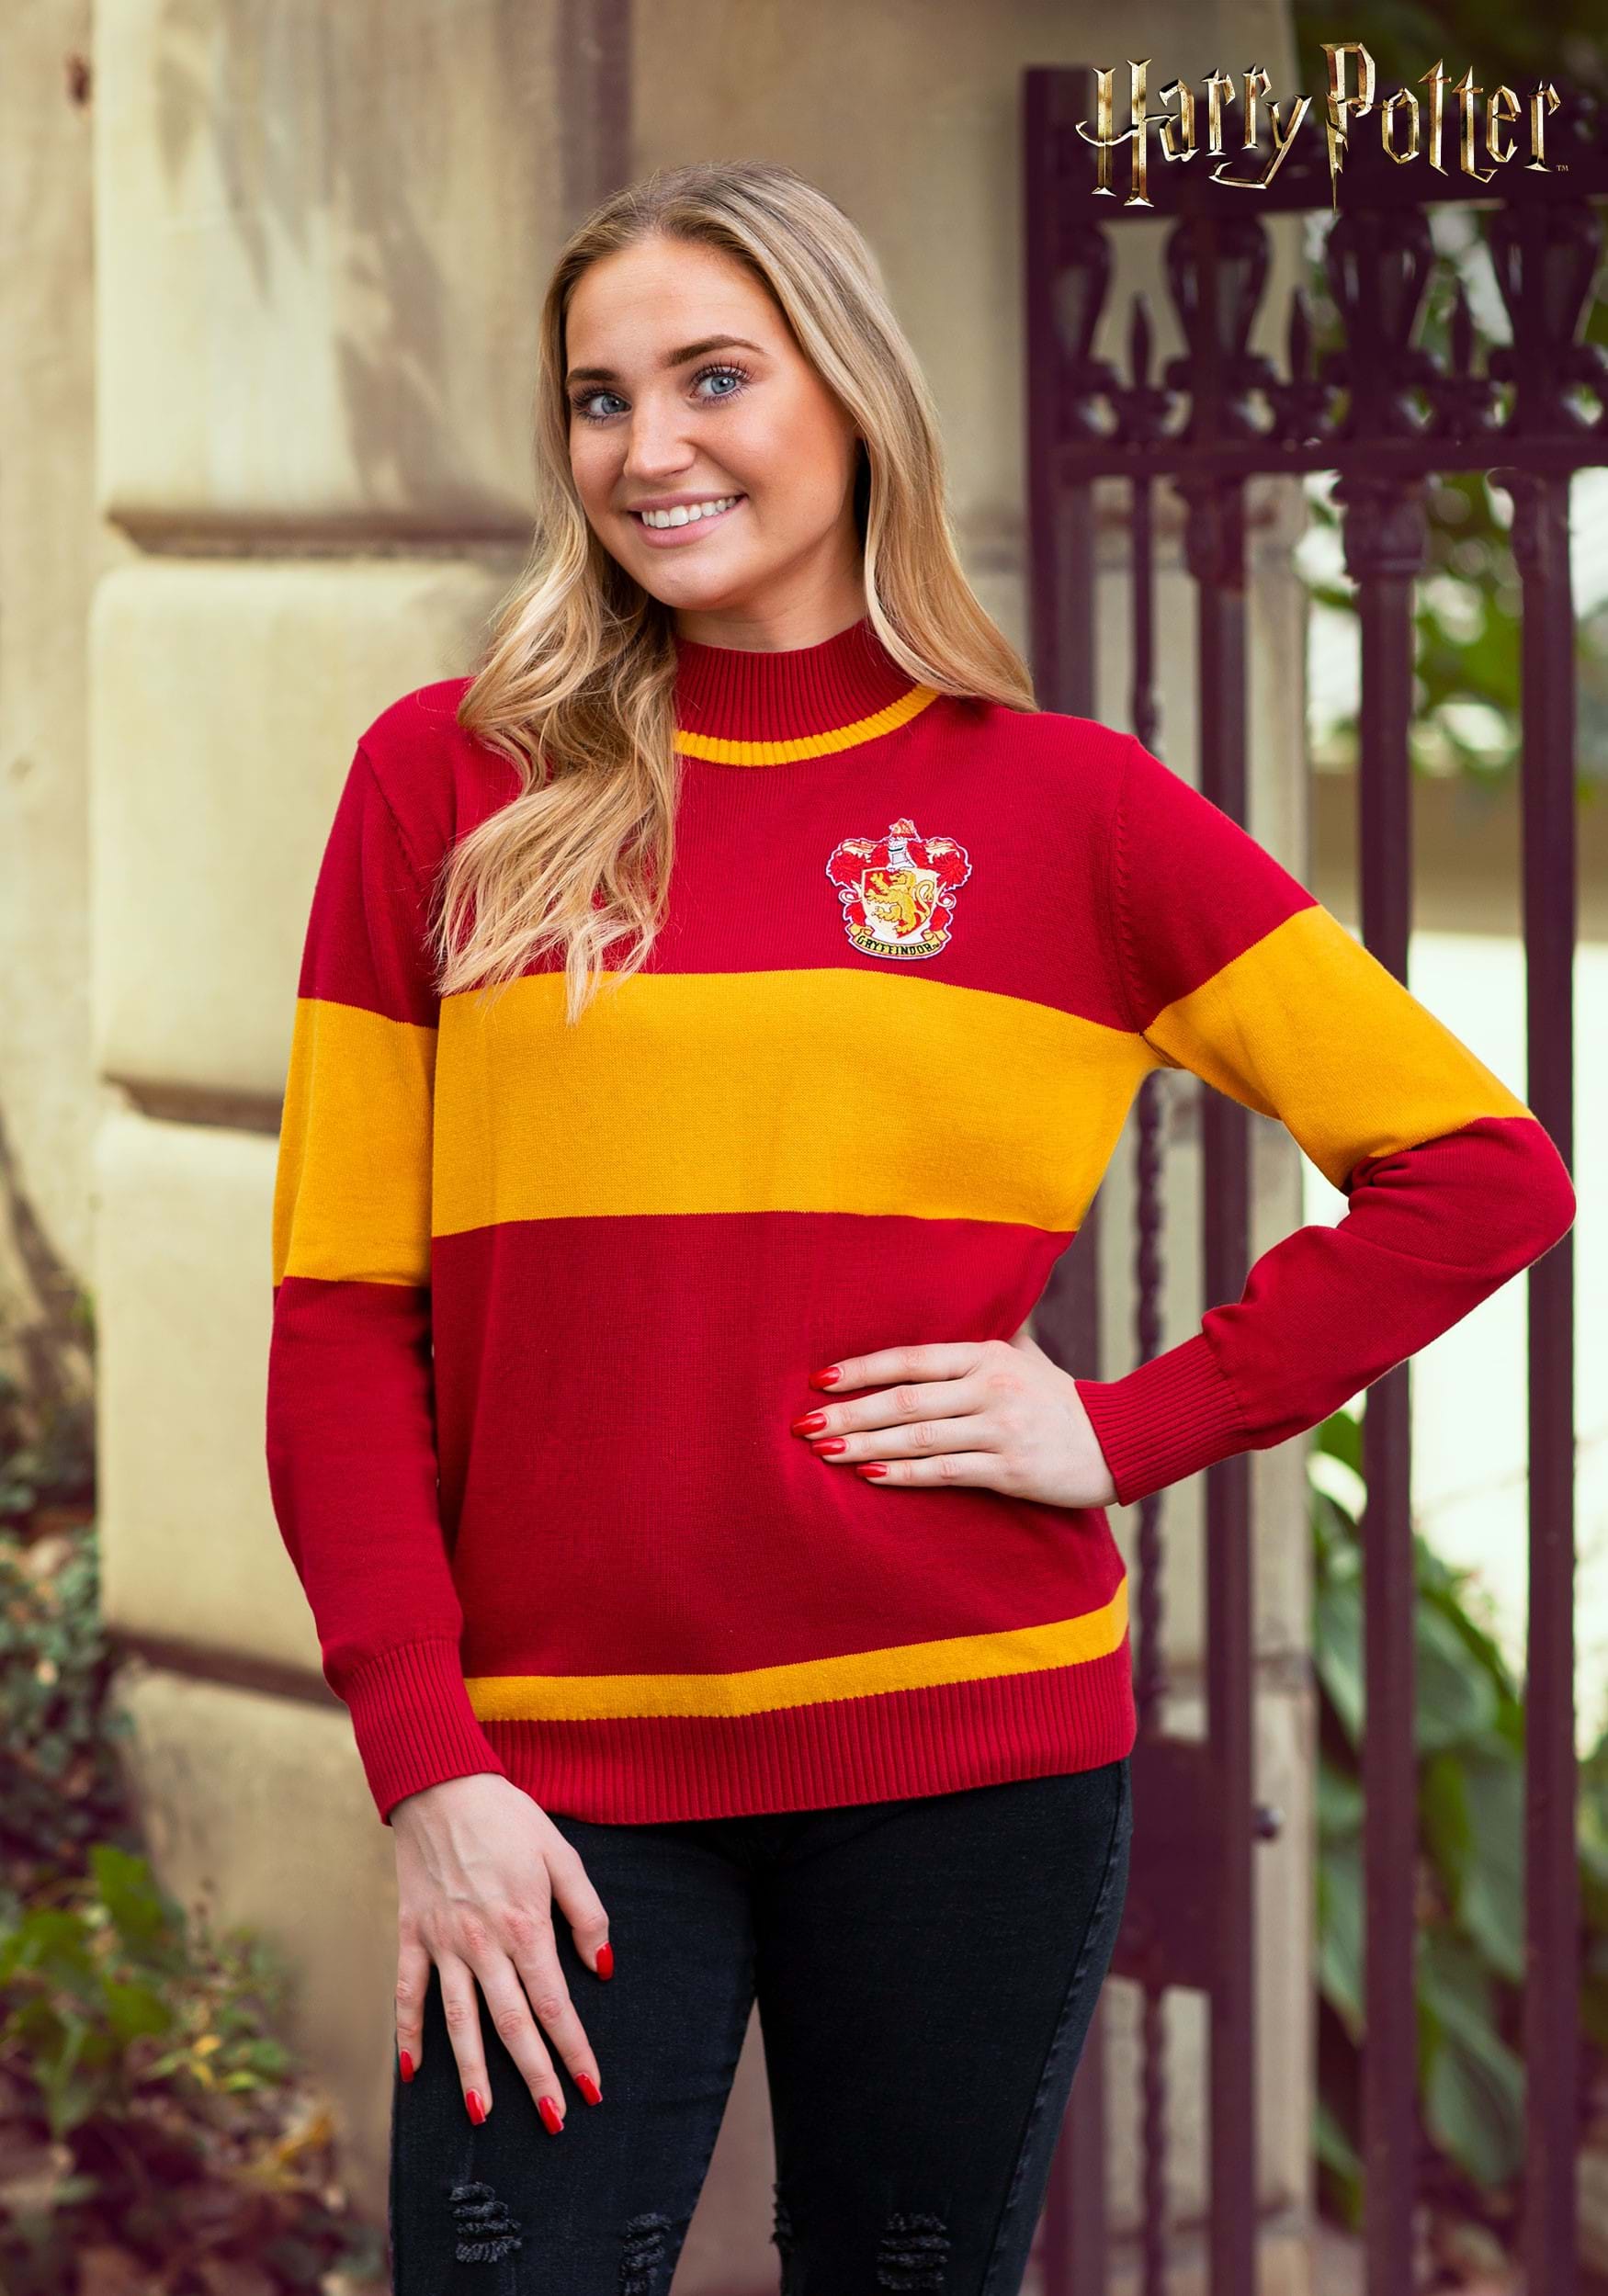 Lightweight Gryffindor Quidditch Sweater for Adults